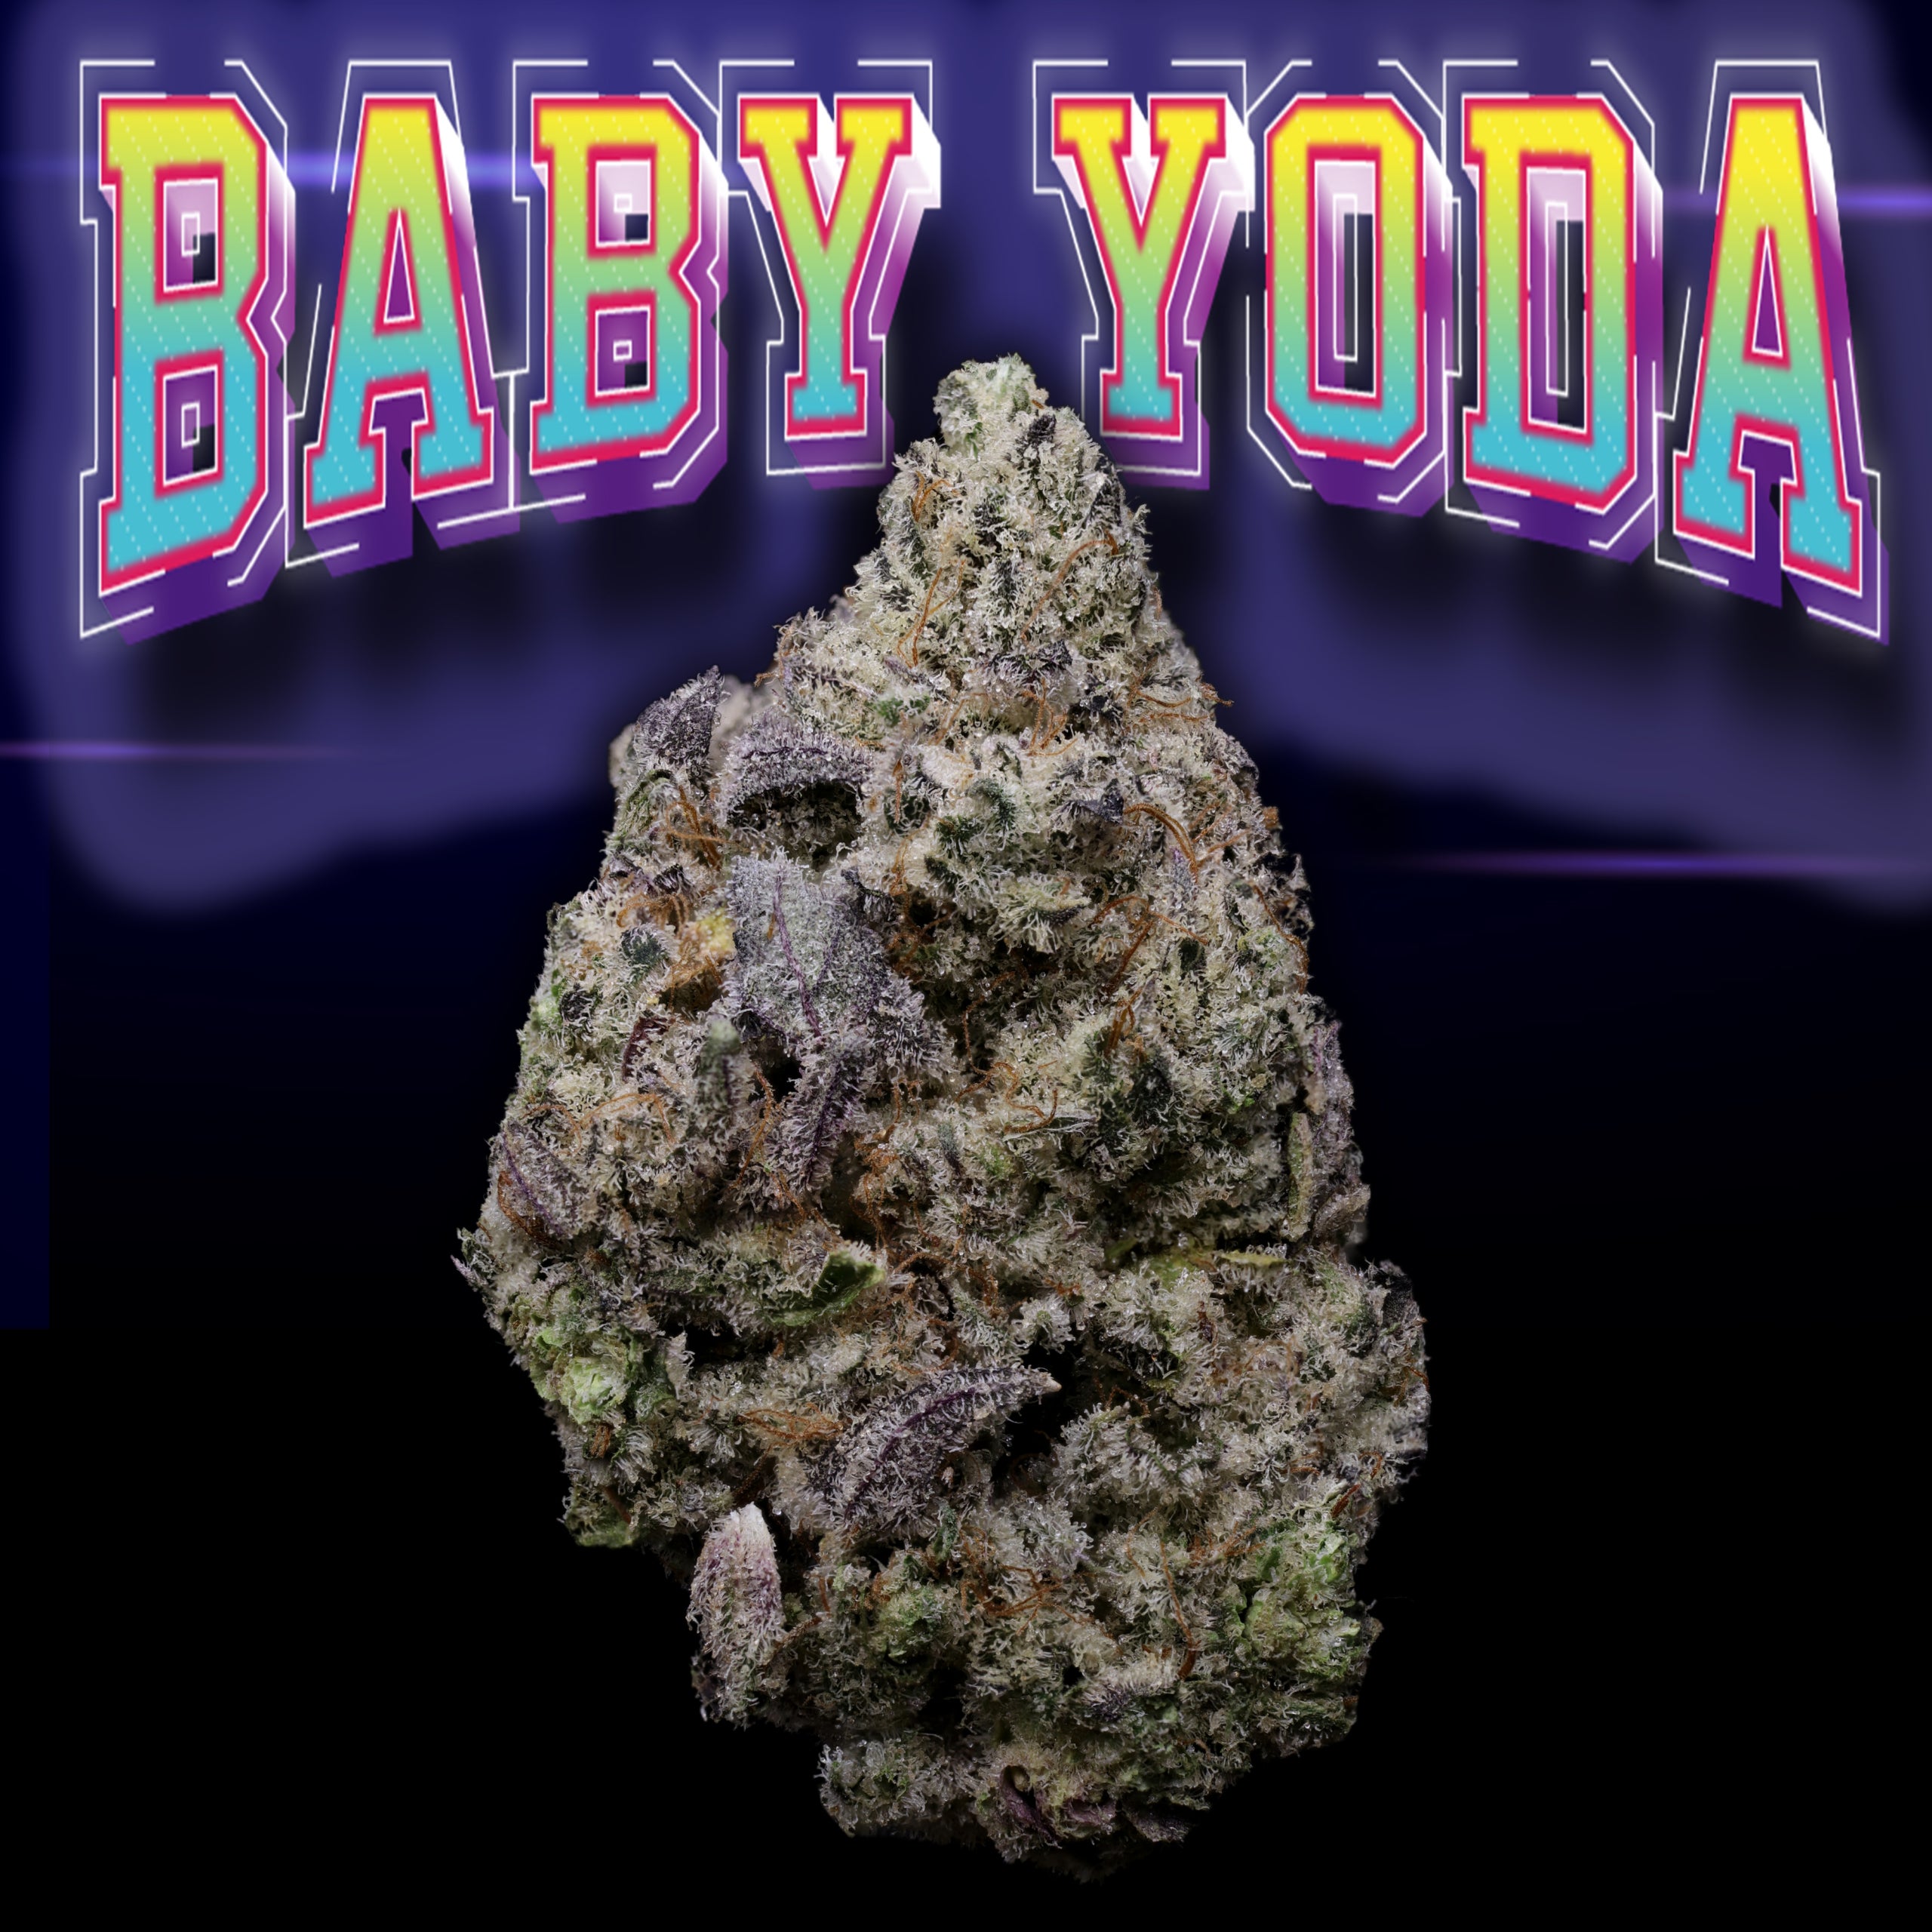 Baby Yoda Bud